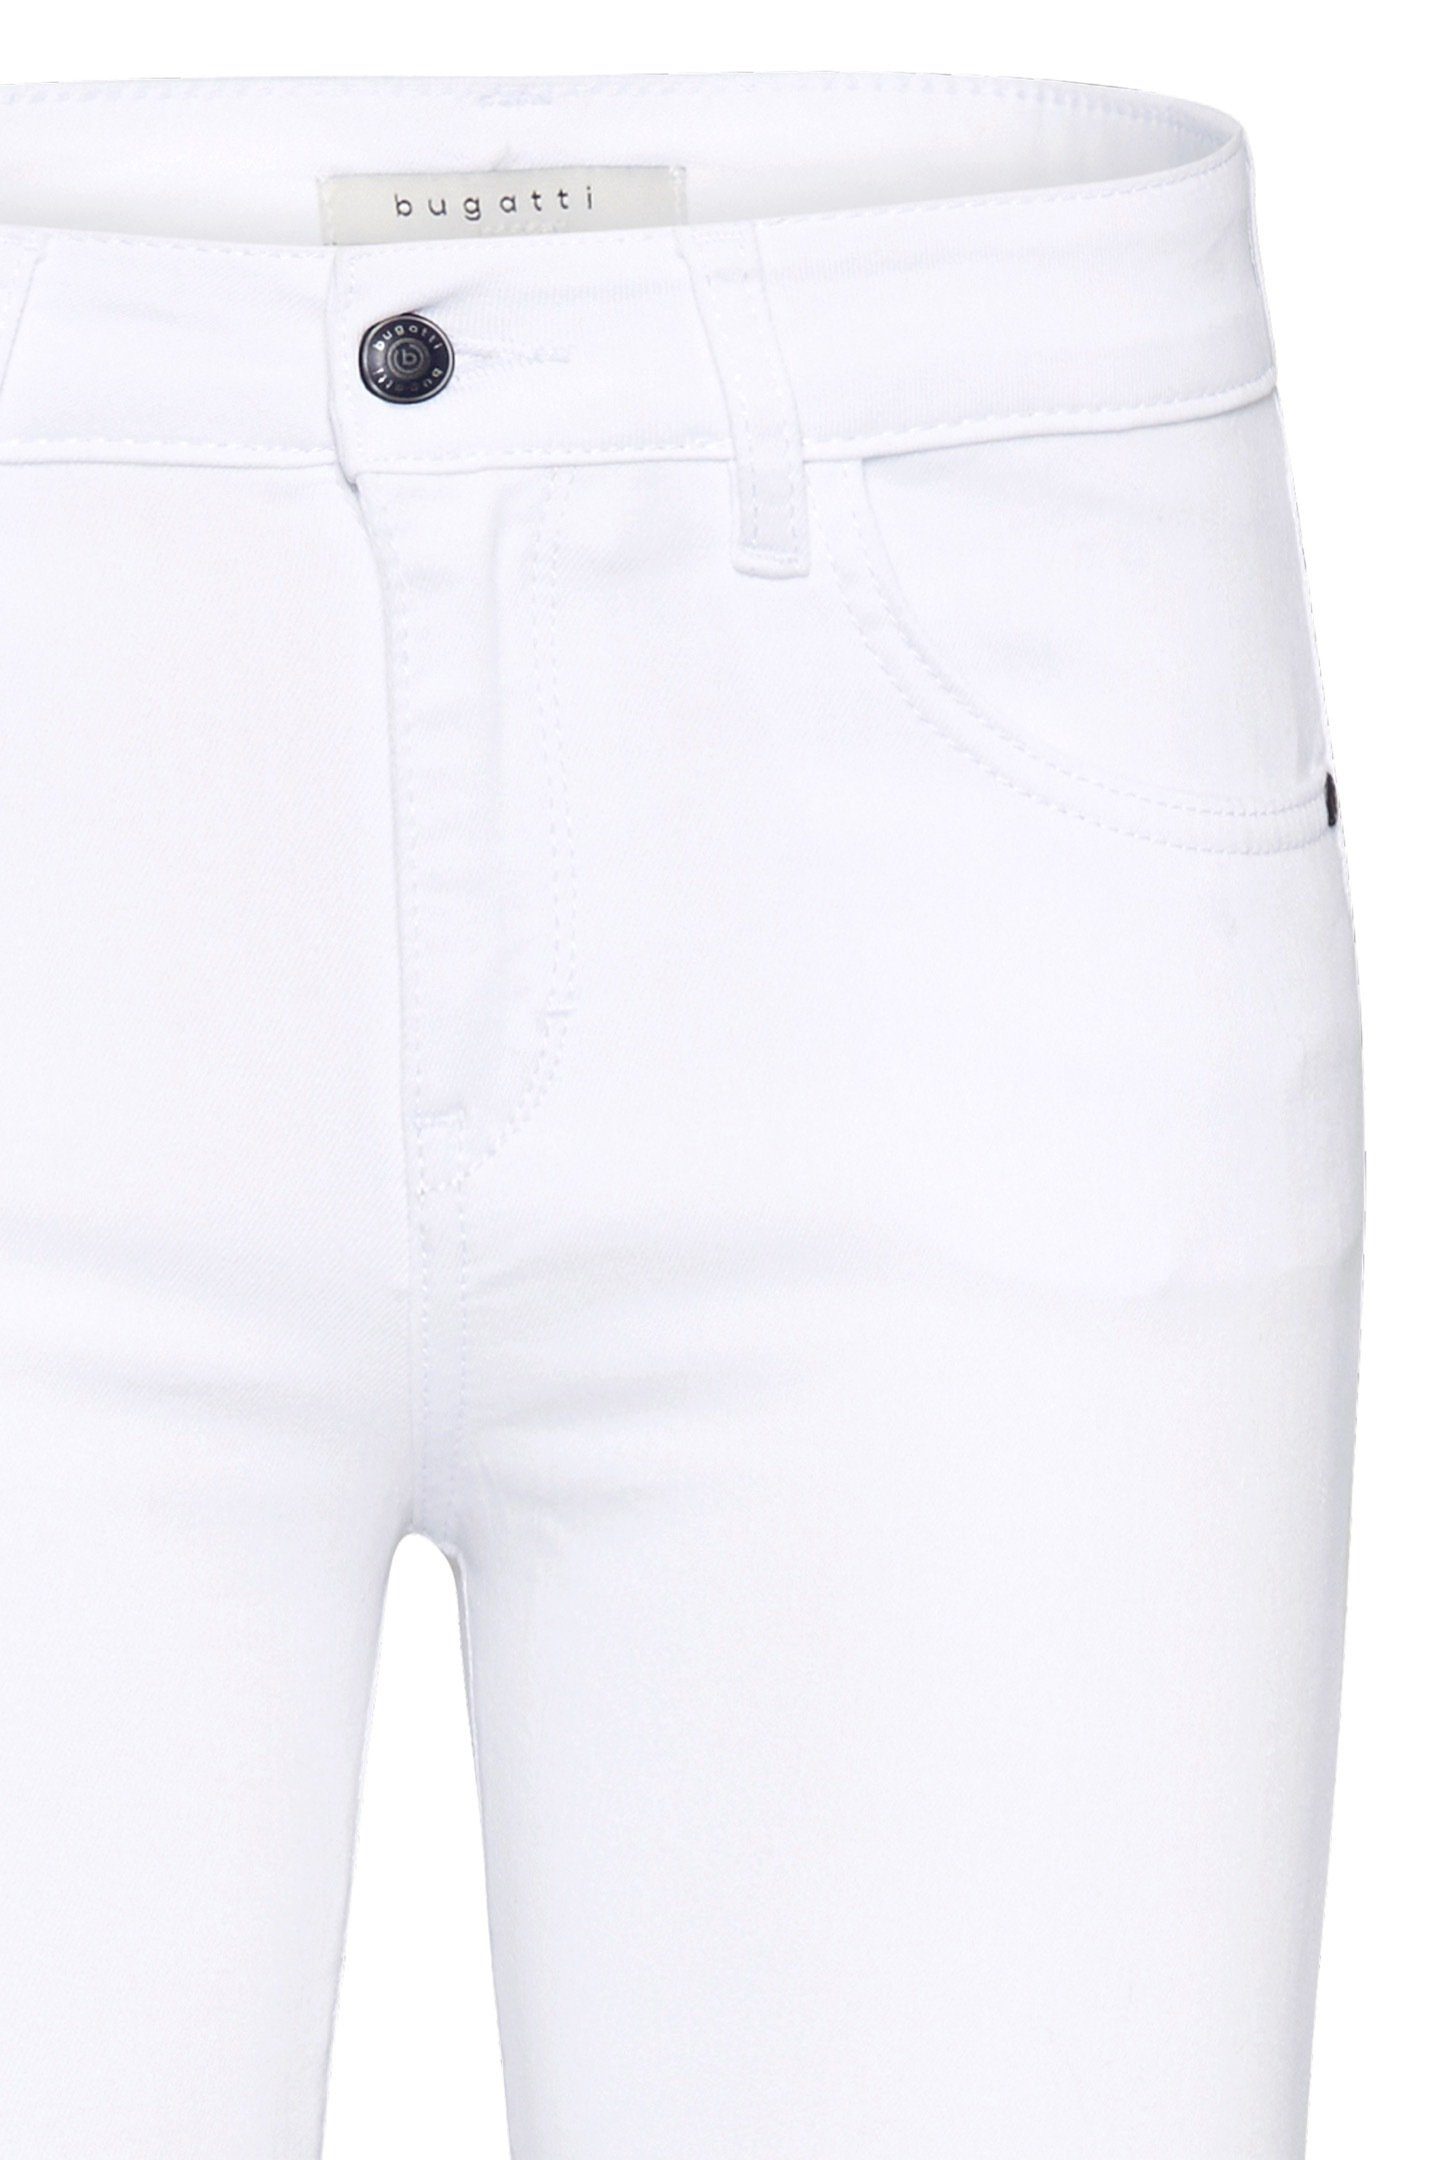 bugatti Länge 7/8 in 5-Pocket-Jeans